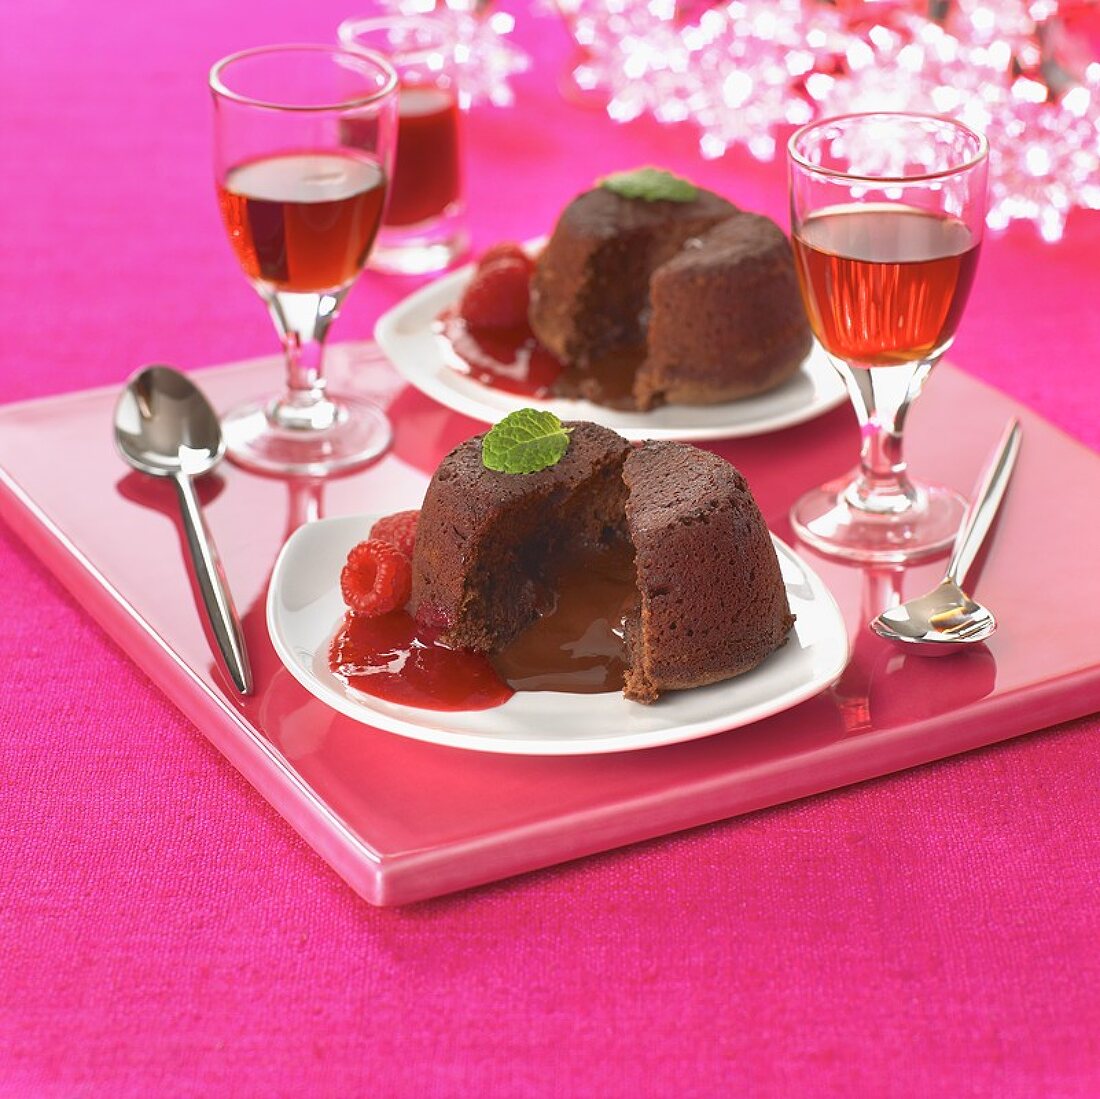 Chocolate pudding with raspberry sauce